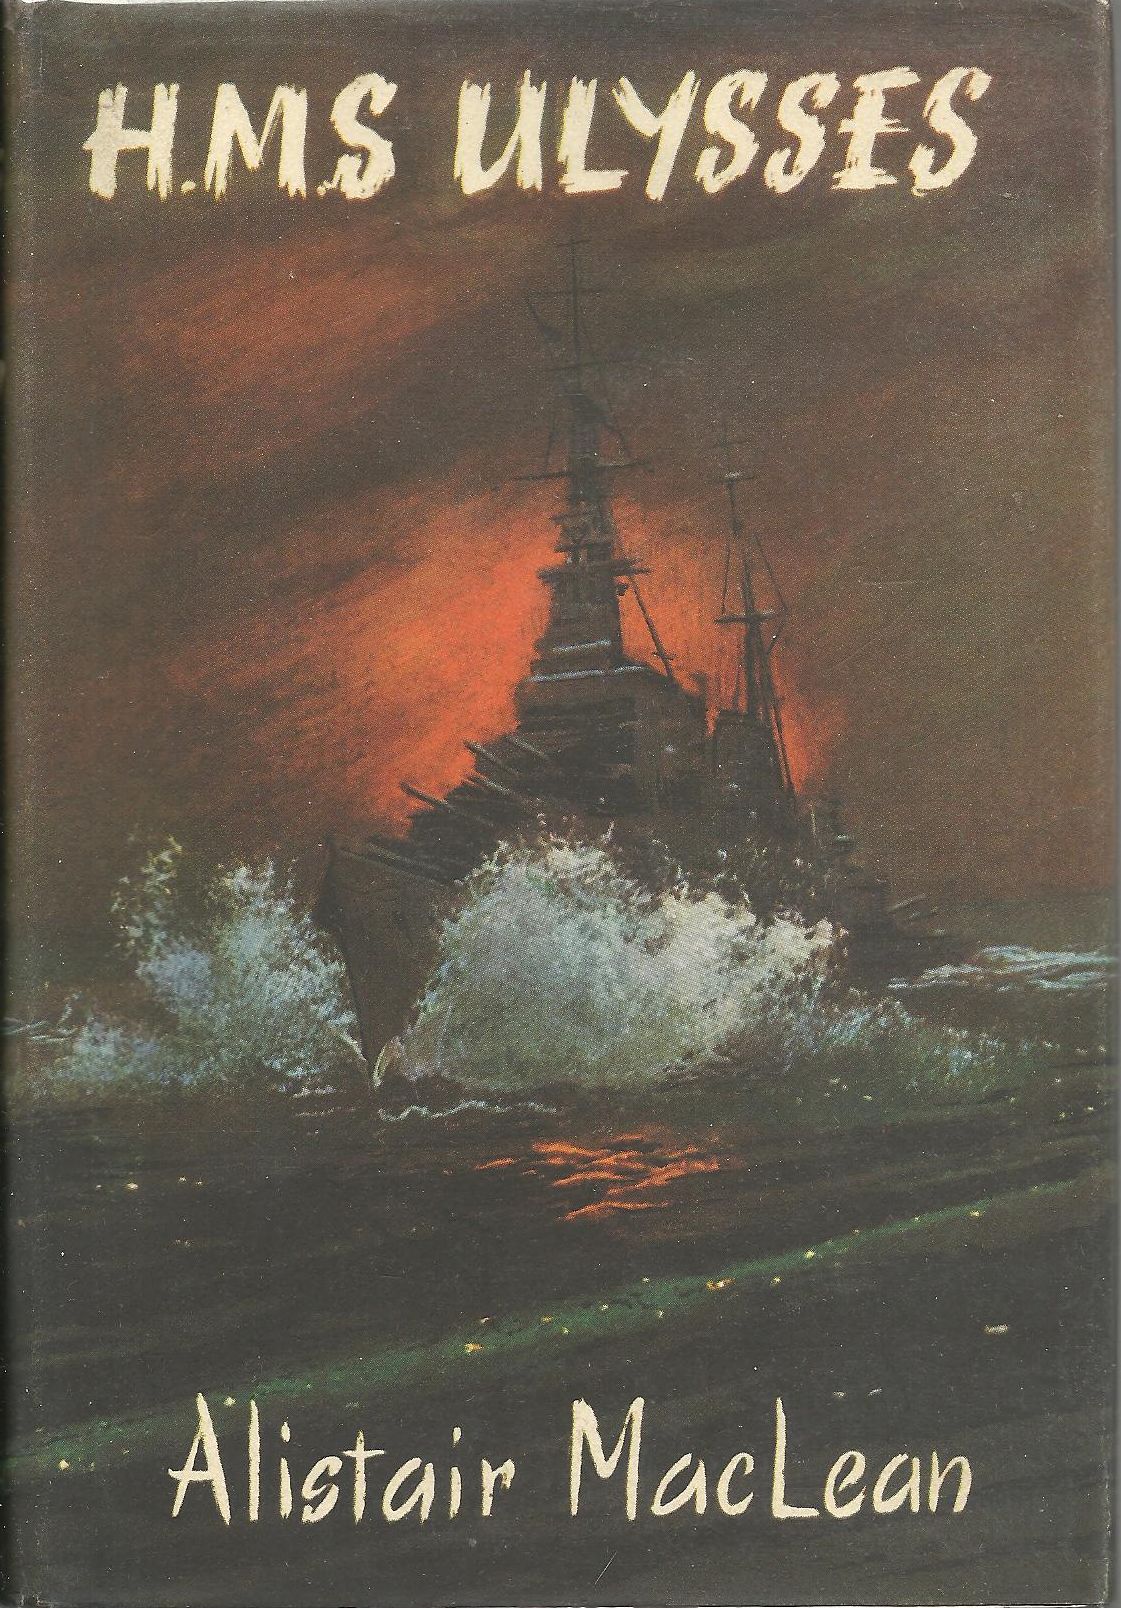 HMS Ulysses - UK first edition